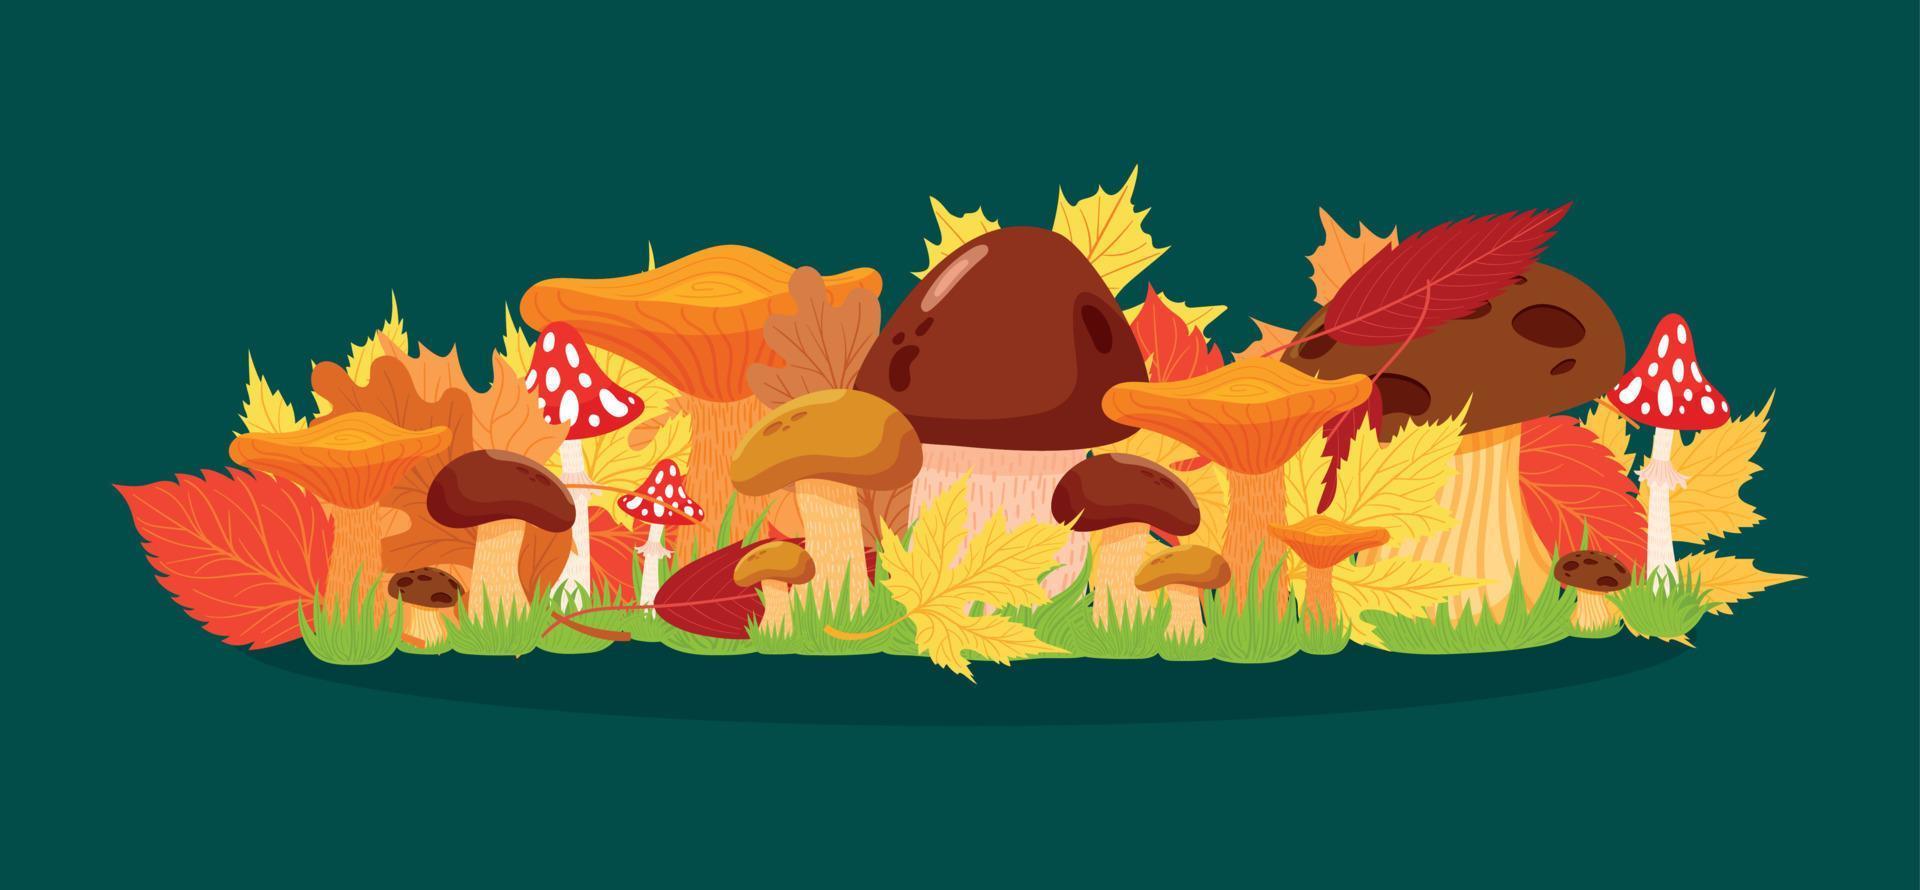 Cute different leaves, mushrooms. Fall seasonal elements vector illustration